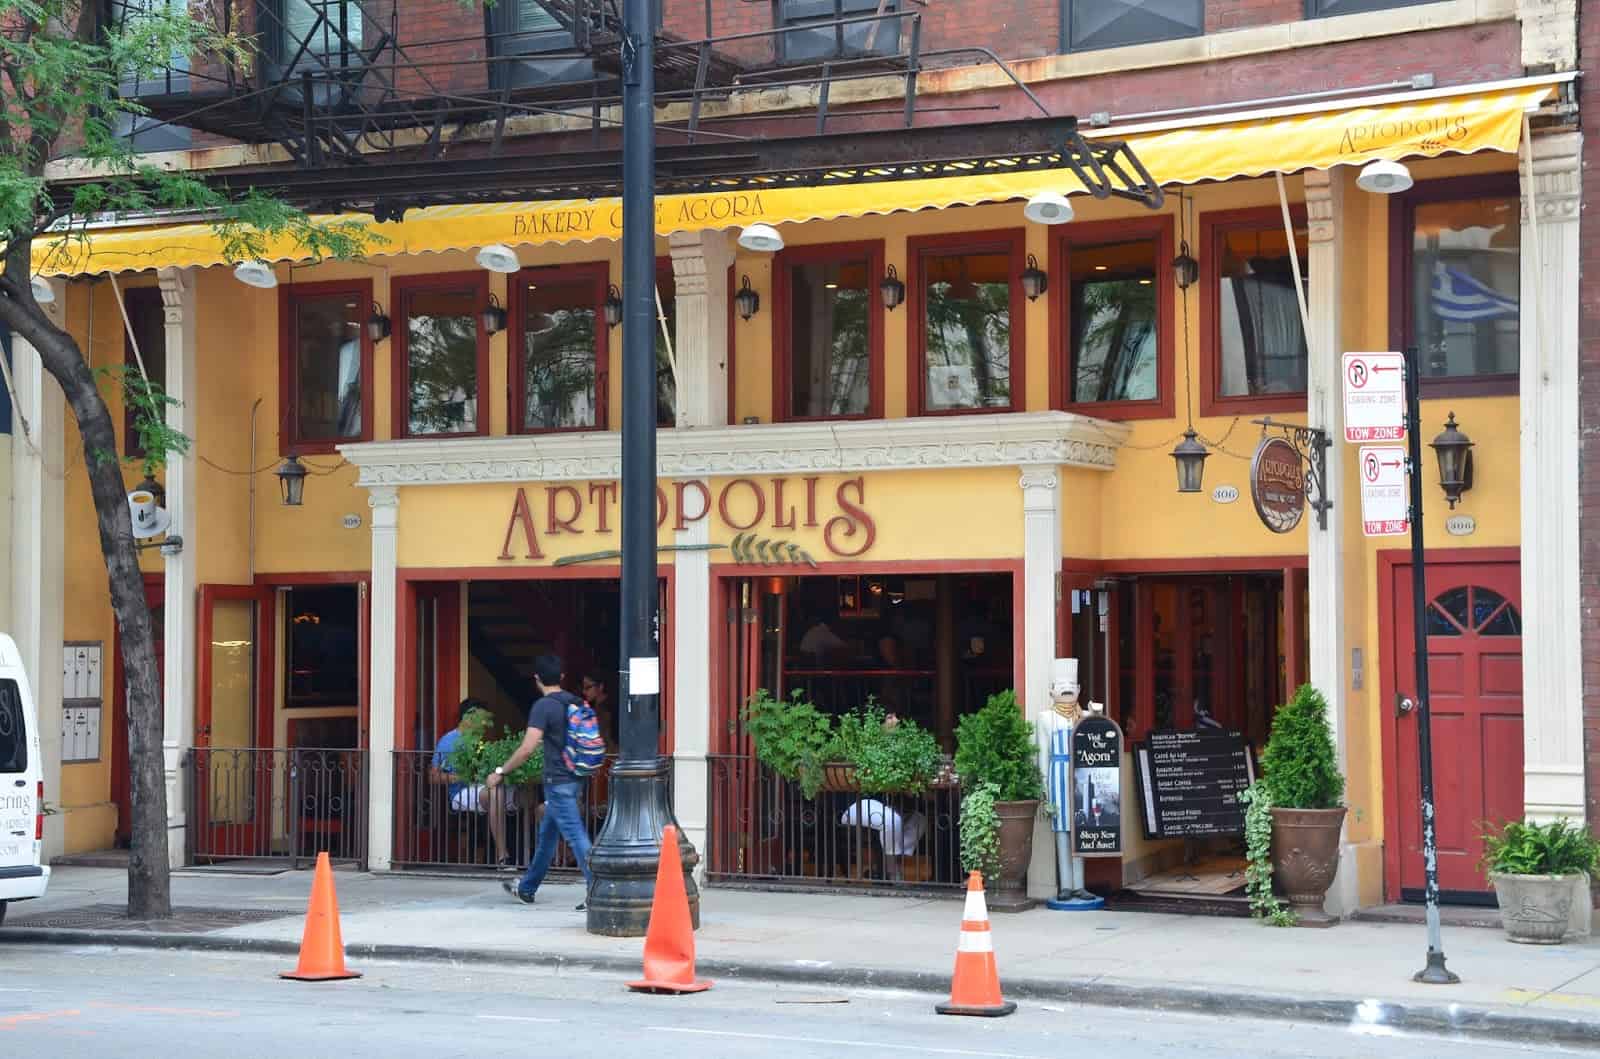 Artopolis Bakery and Café in Greektown Chicago